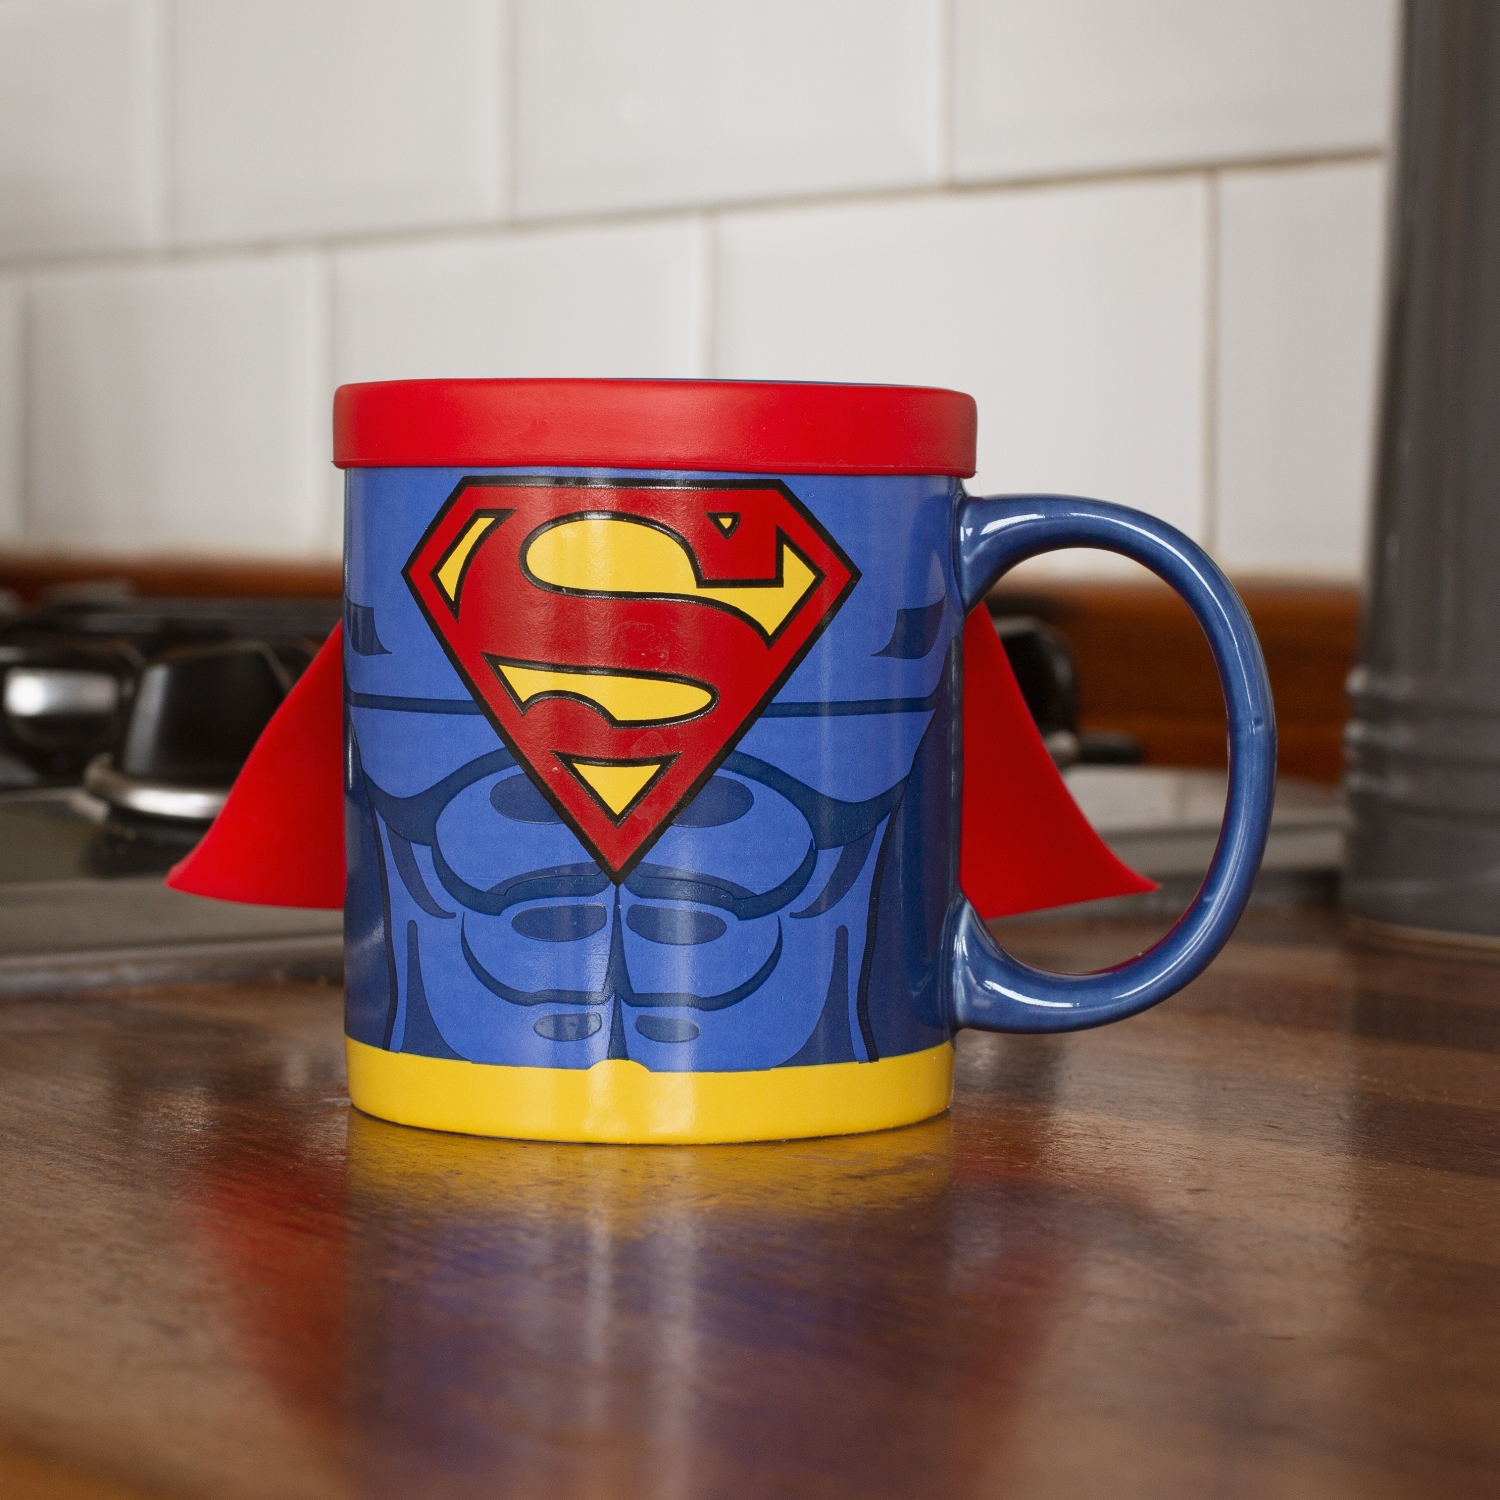 Thumbs Up Superman Mug with Cape - Eins/Eine(r) - 0,25 l - Blau - Rot - Keramik - Silikon - Universal - 1 Stück(e)